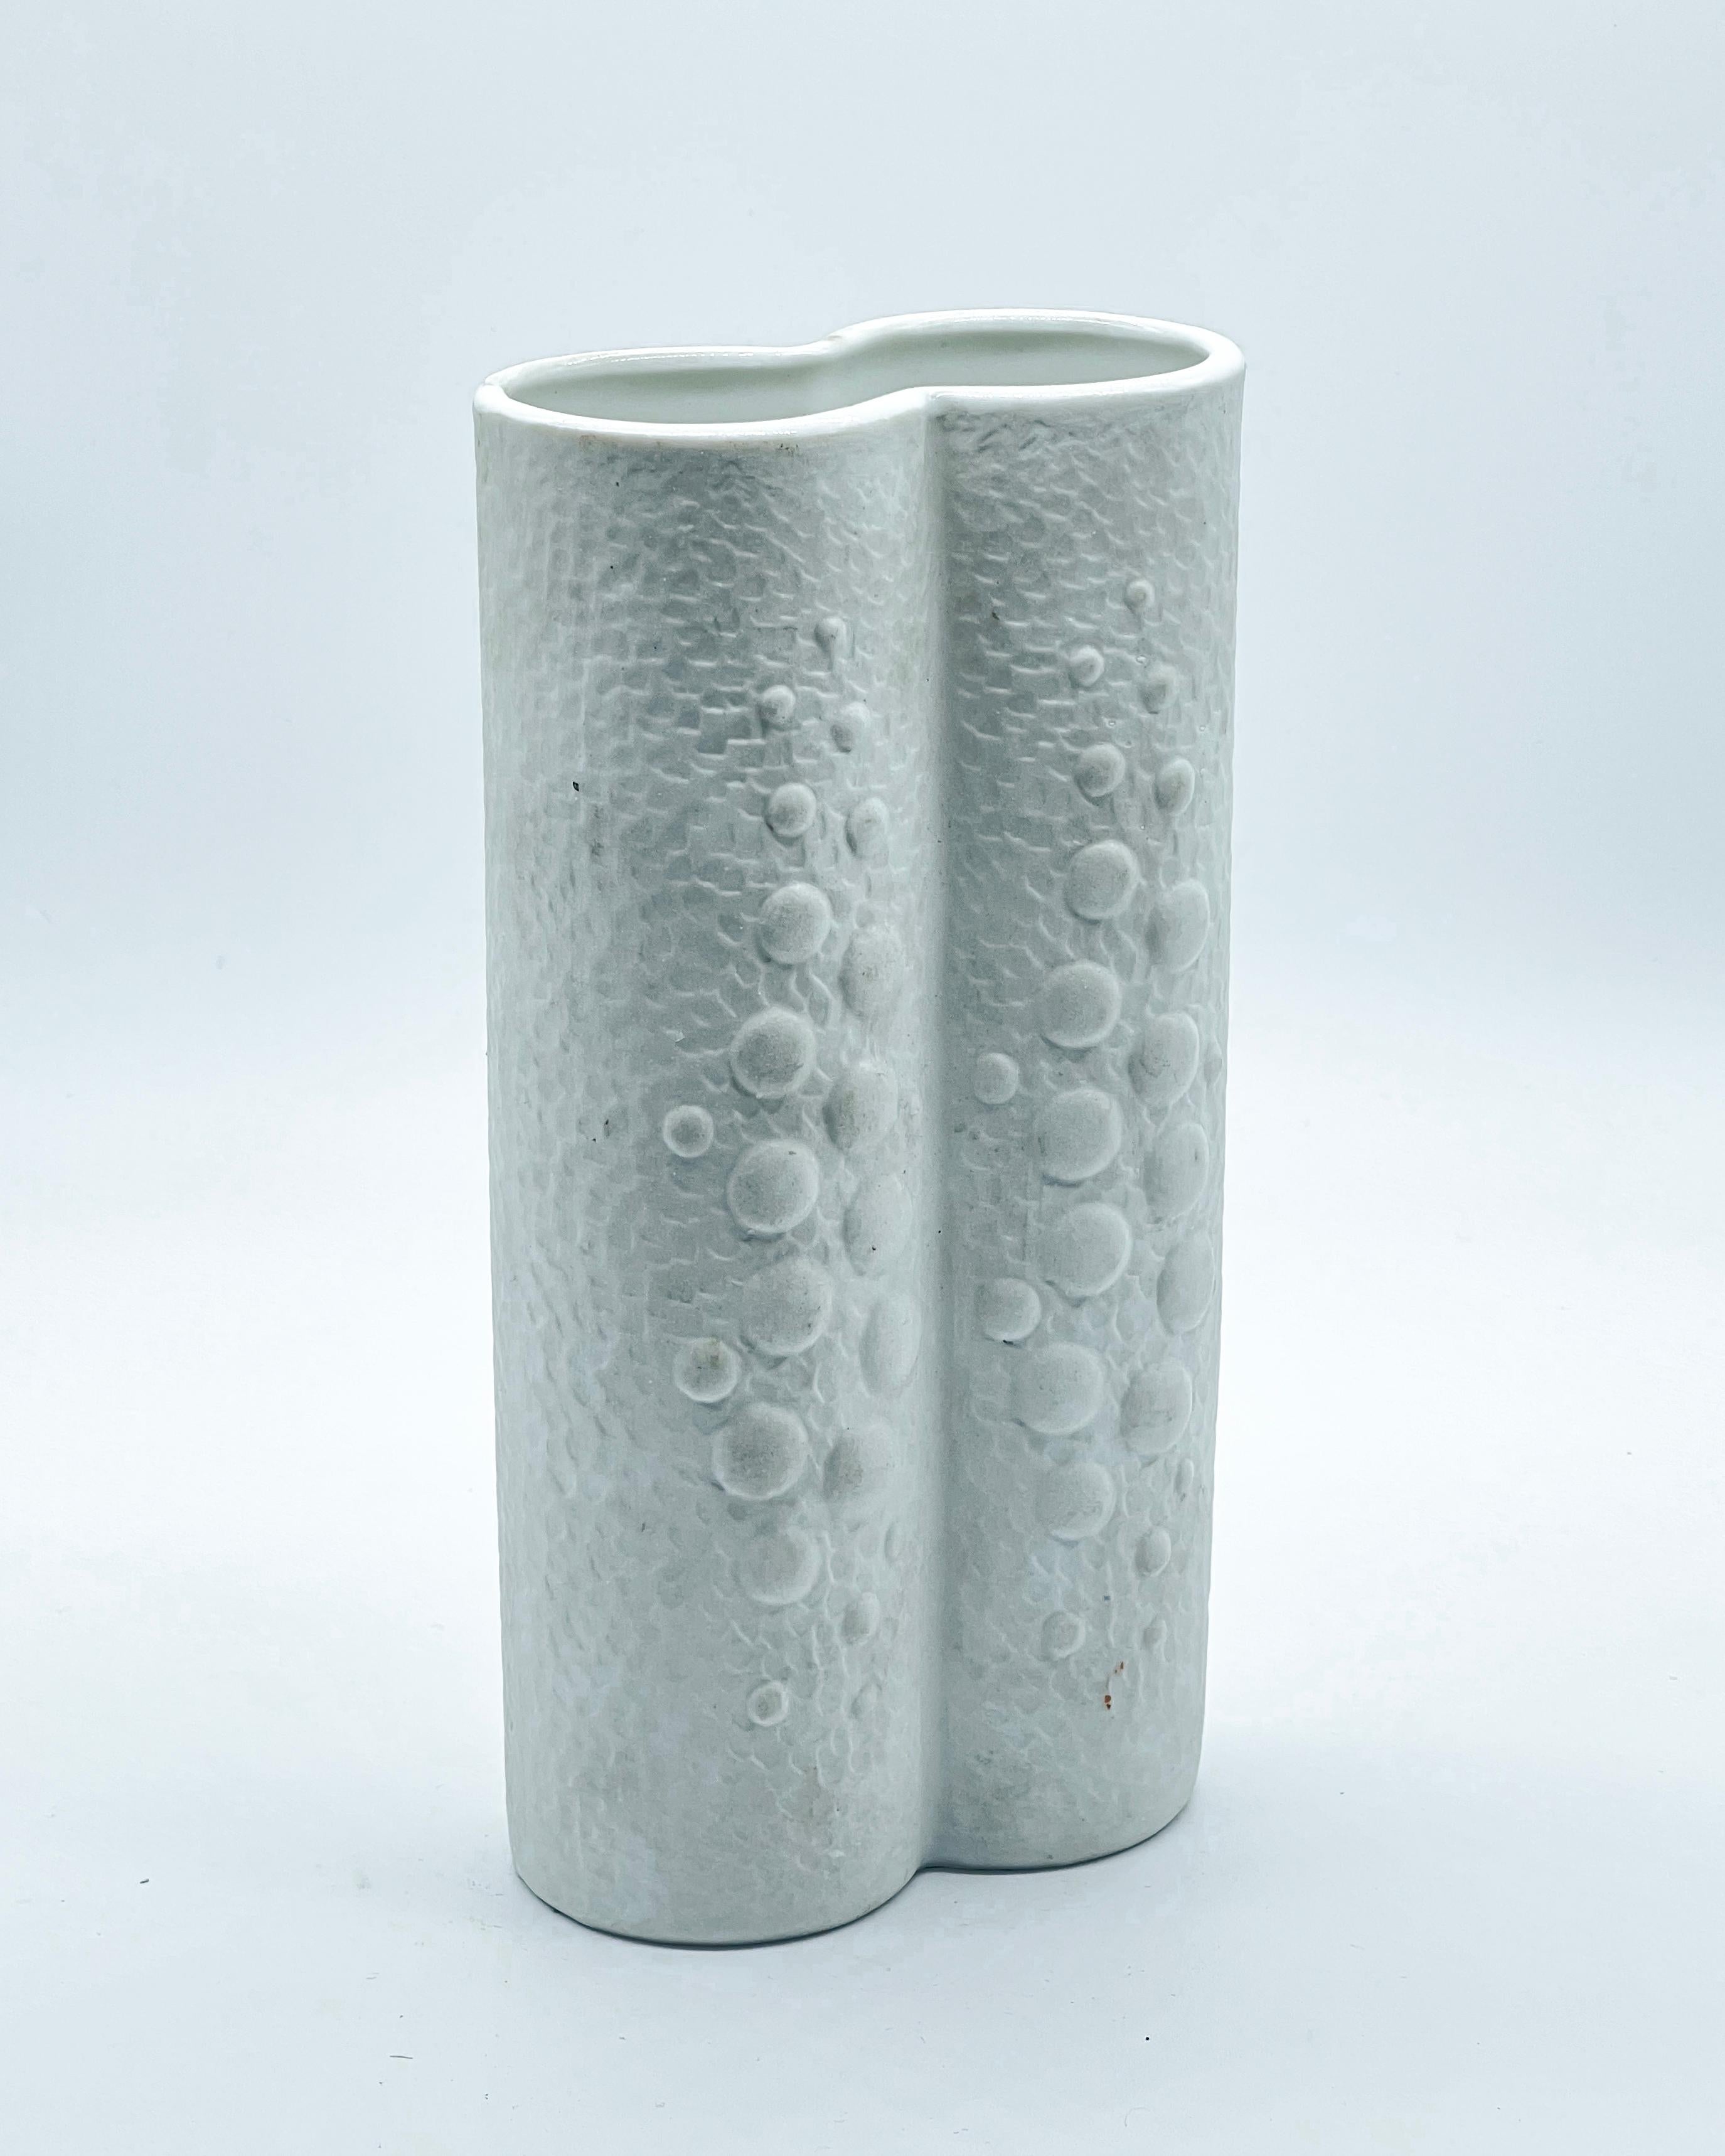 Vaso di porcellana bianca - Vaso di ceramica fine - Vaso decorativo fatto a mano

Bel vaso vintage in porcellana bianca, fatto a mano e firmato 